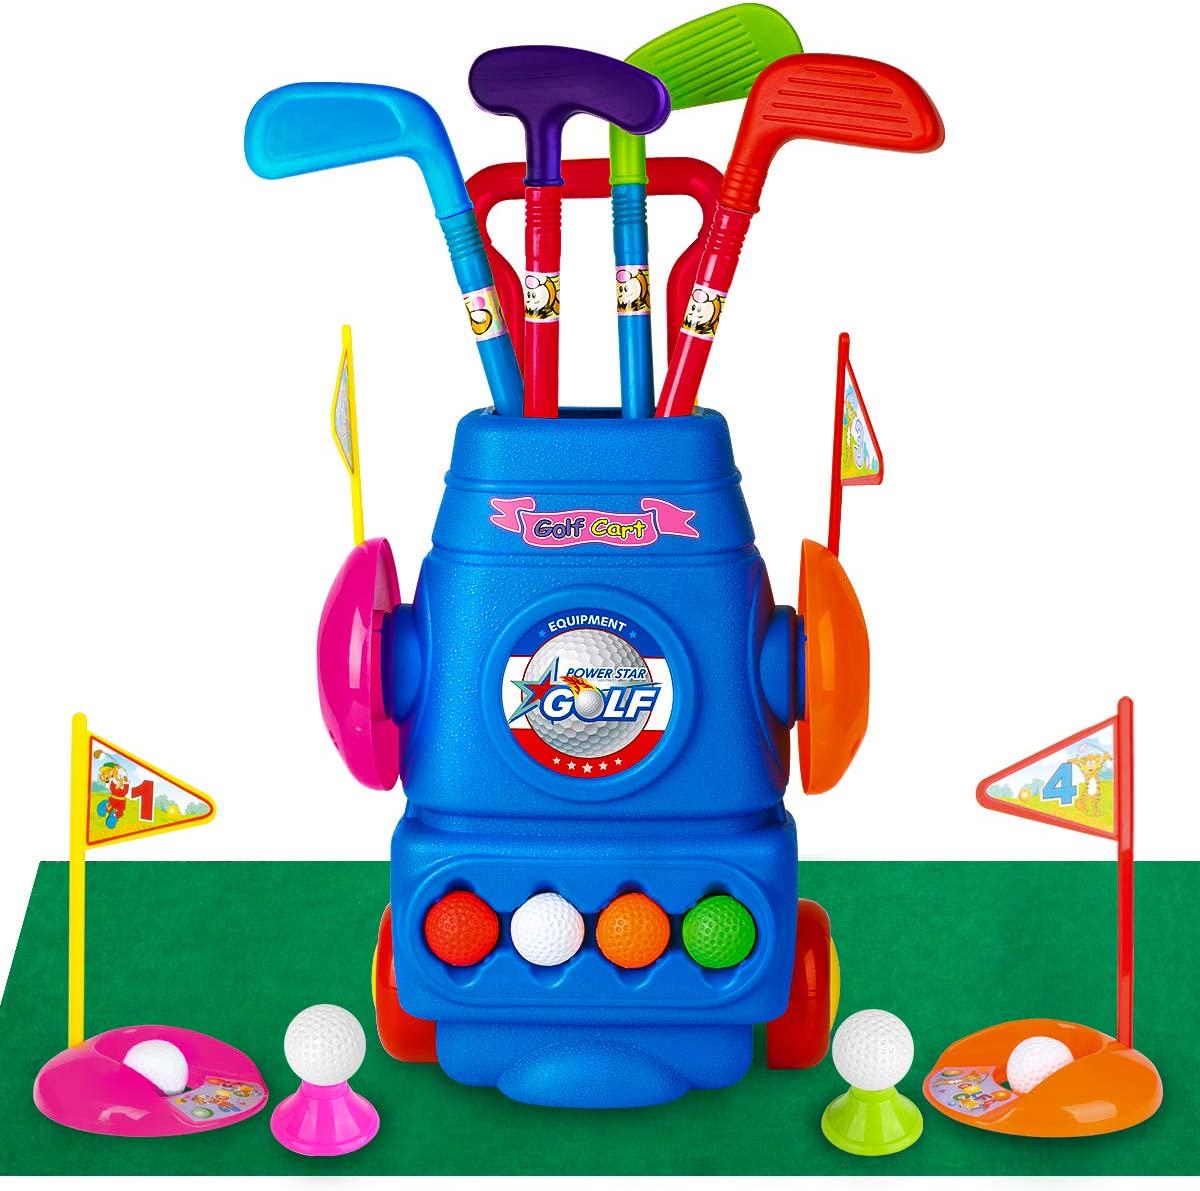 Meland, Meland Kids Golf Club Set - Toddler Golf Ball Game Play Set Sports Toys Gift for Boys Girls 3 4 5 6 Year Old (Blue)